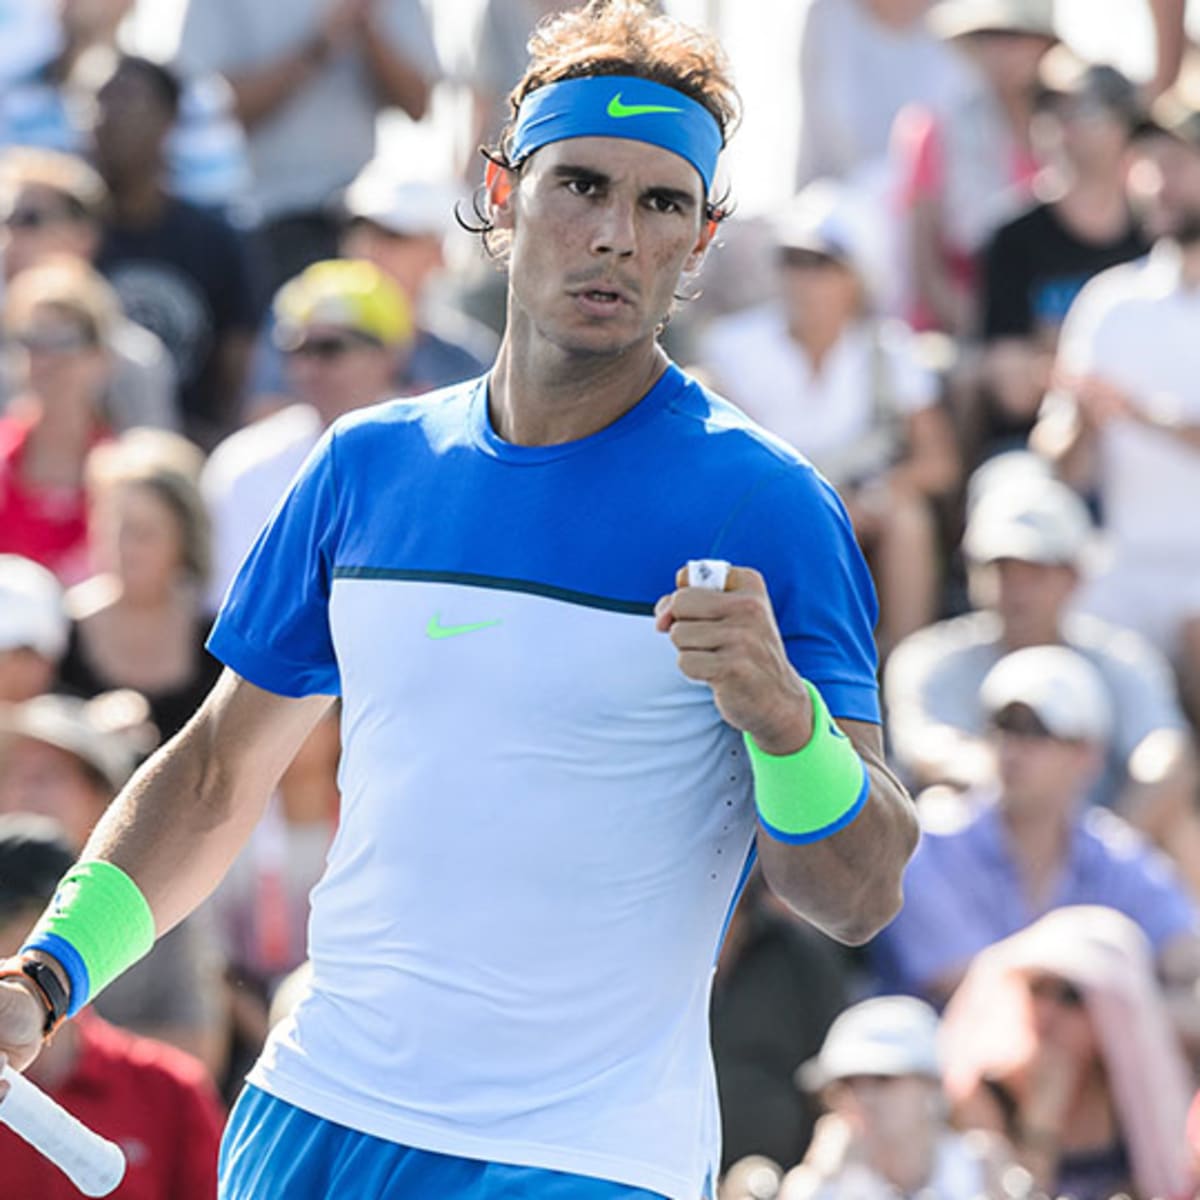 Jon Wertheim Mailbag: Rafael Nadal's chances at . Open, major title -  Sports Illustrated